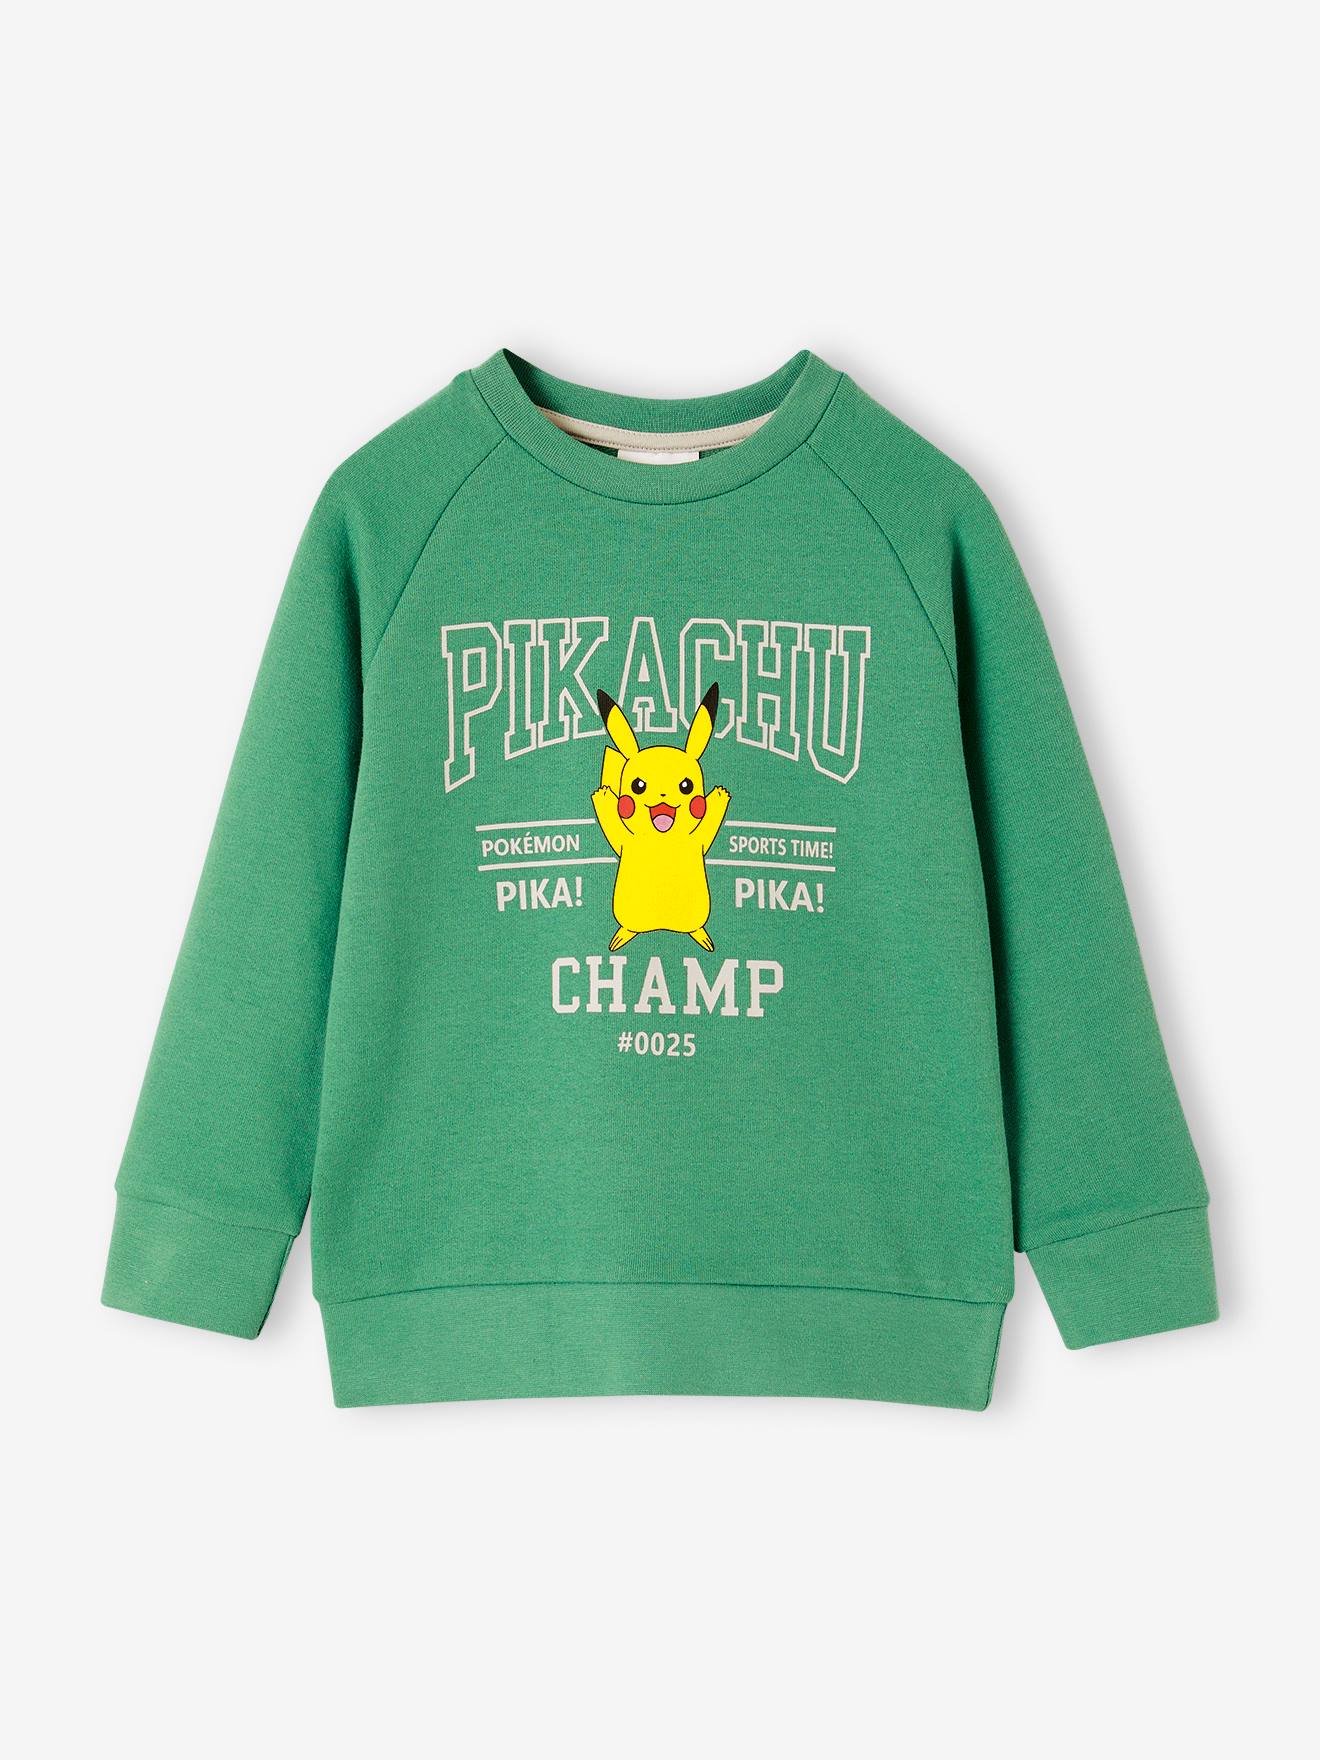 Pokemon(r) Sweatshirt for Boys mint green